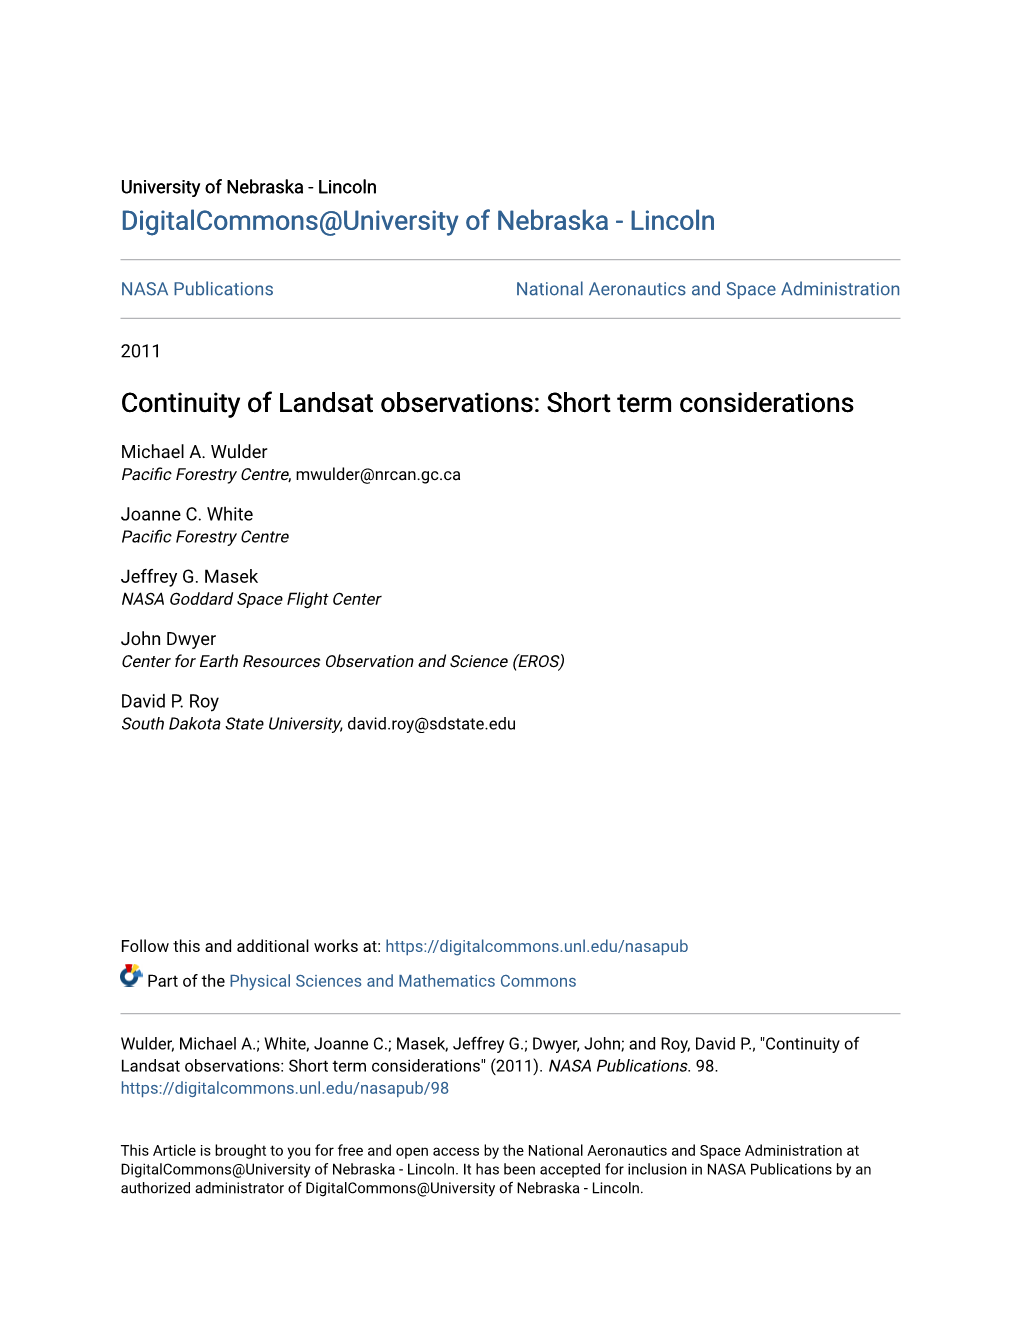 Continuity of Landsat Observations: Short Term Considerations